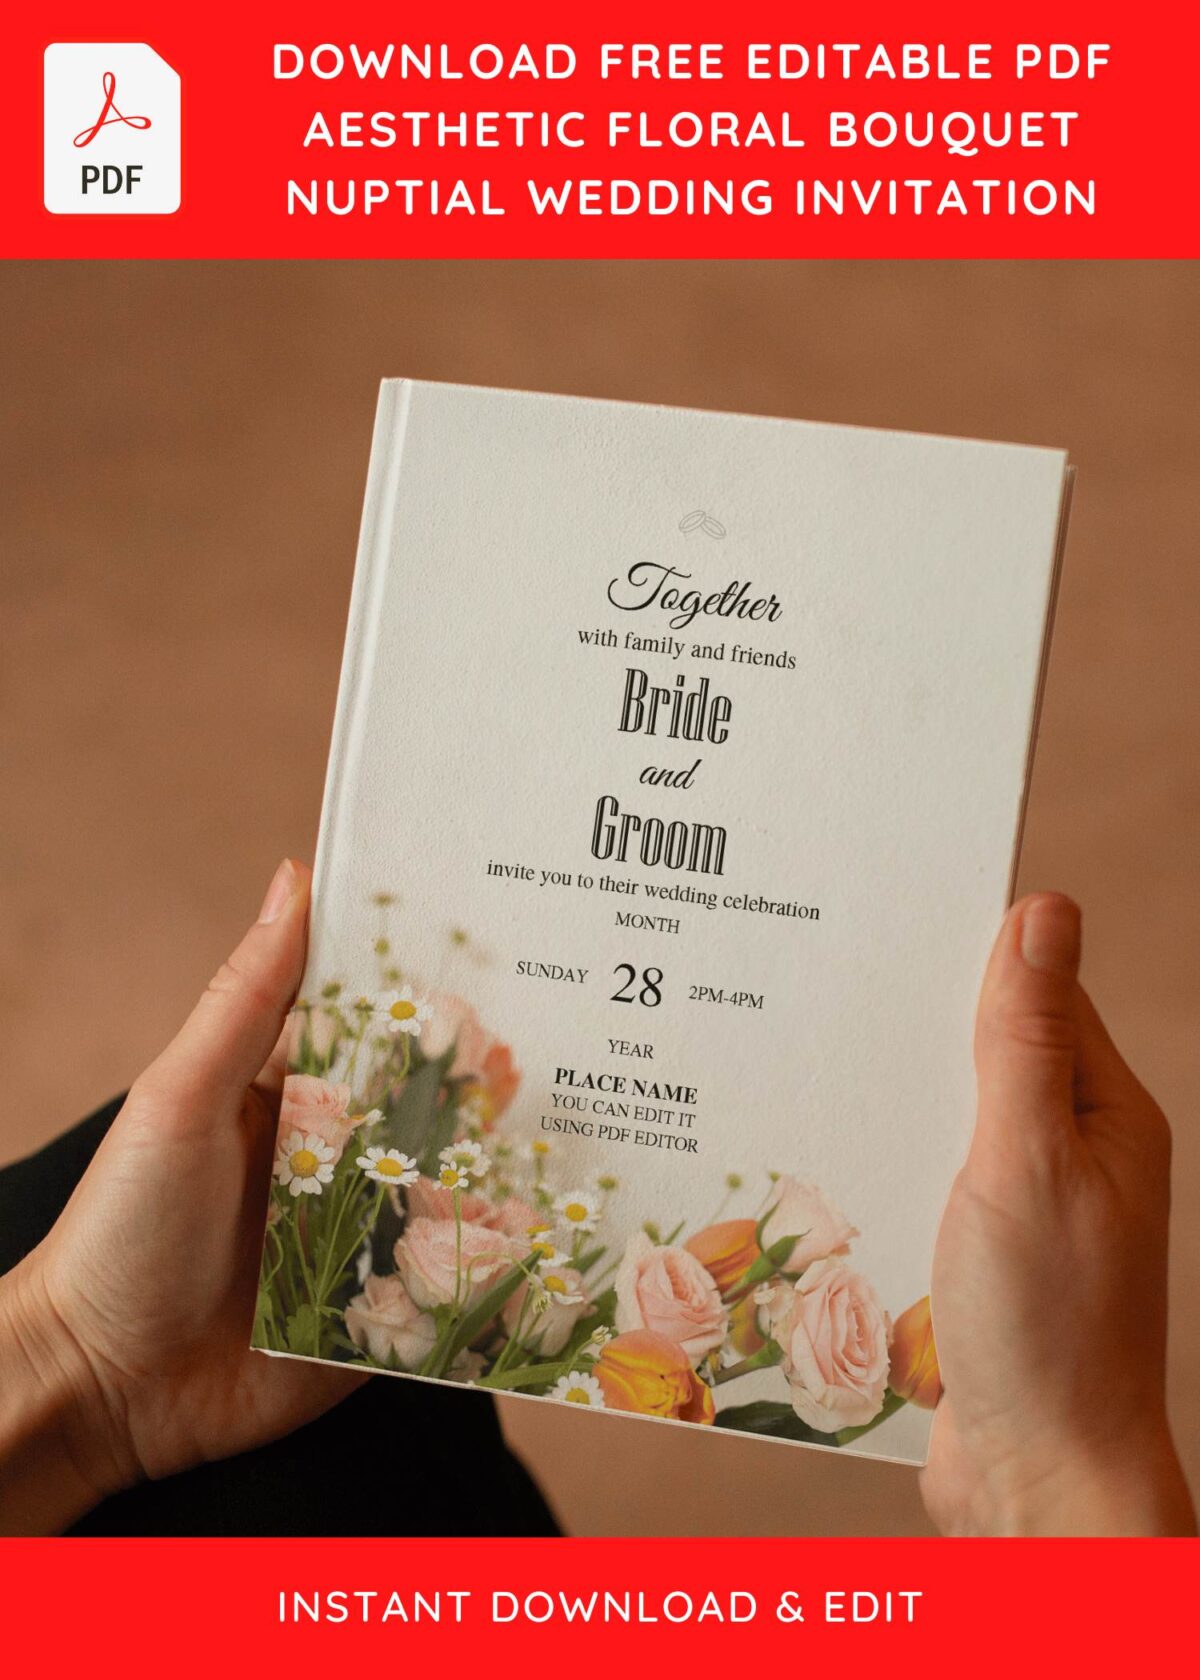 (Free Editable PDF) Pristine White Rose Wedding Invitation Templates with elegant typefaces